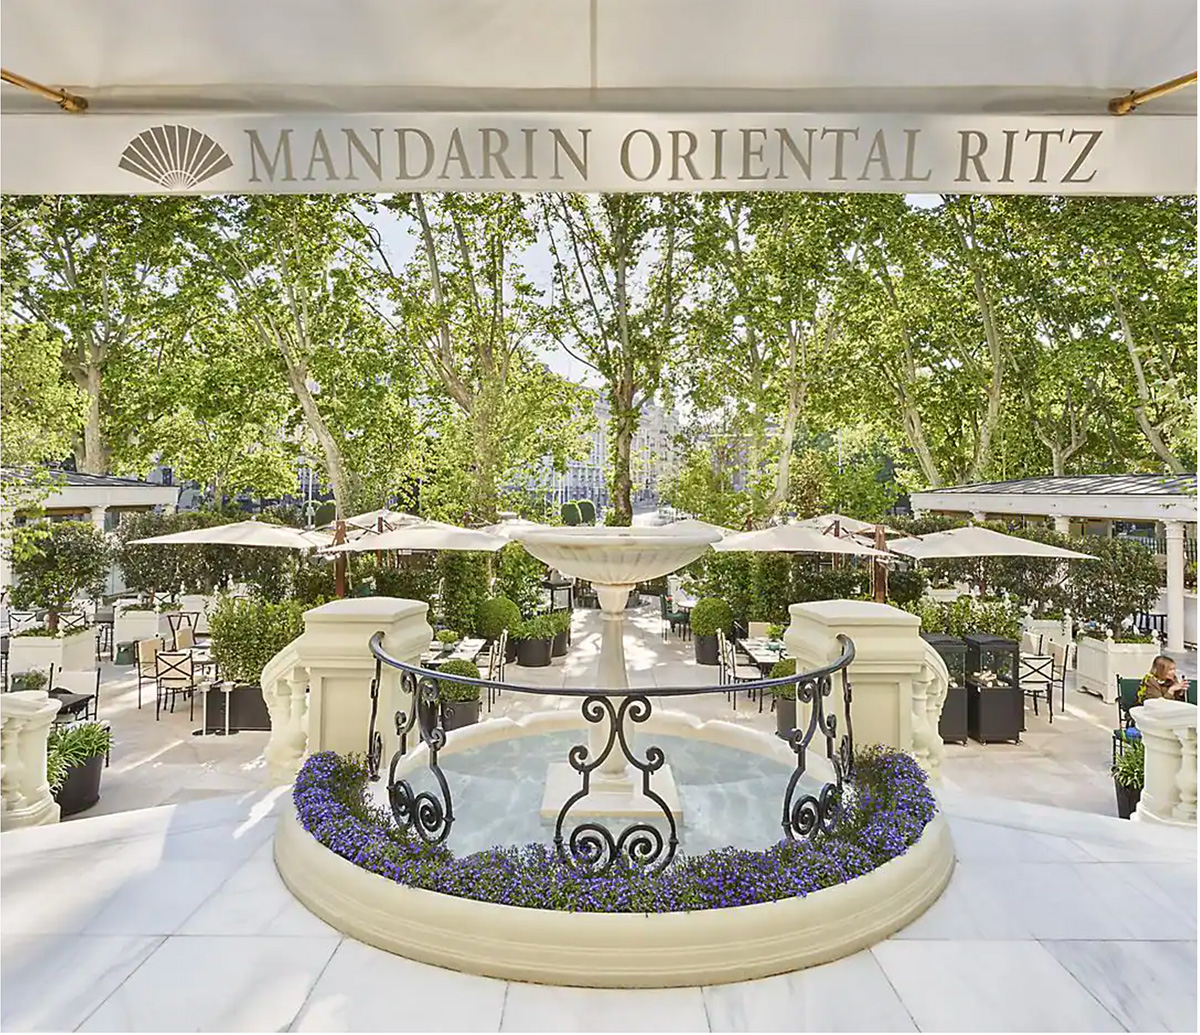 Mandarin Oriental Hotel Ritz, Madrid